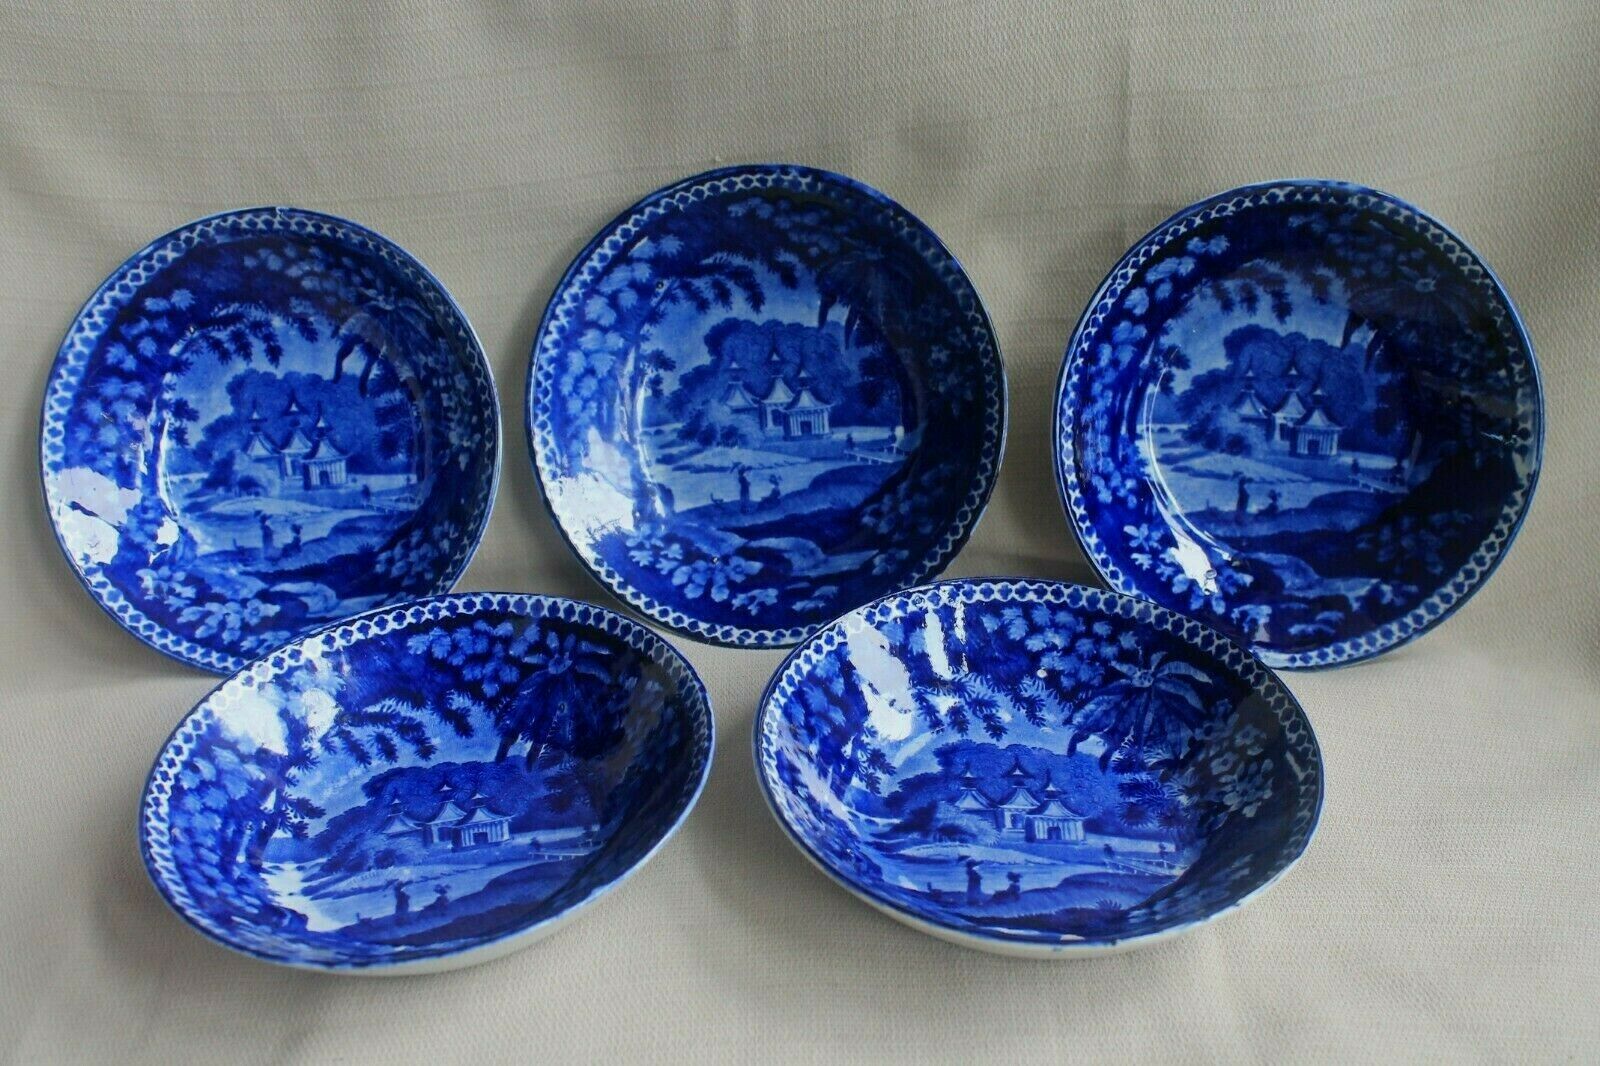 6" Antique Adams Warranted Staffordshire Blue Bowls Set Of 5